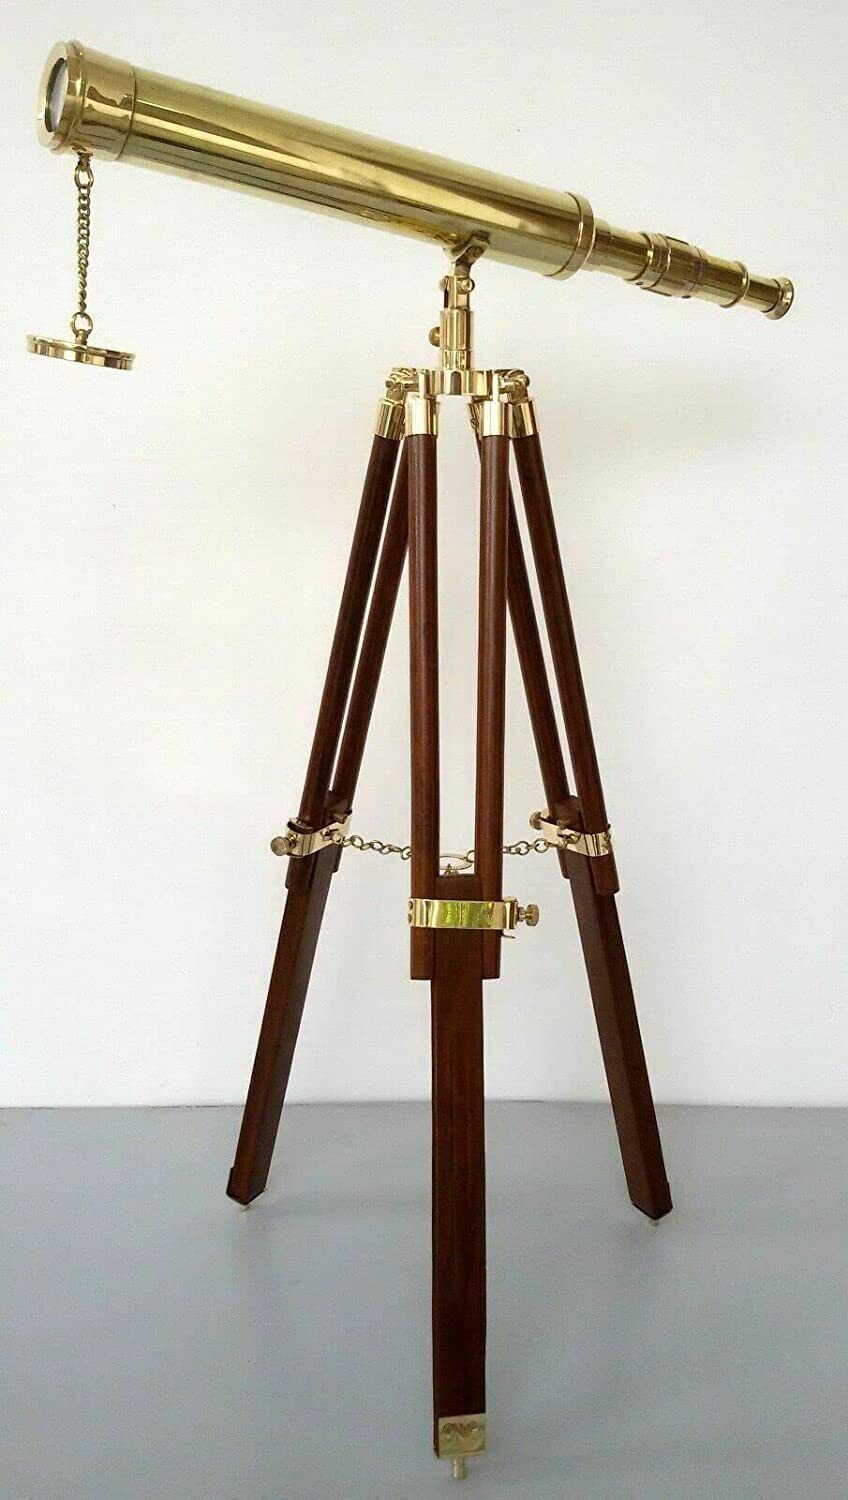 Handmade Telescope Antique Telescope Single Barrel with Wooden Tripod Stand